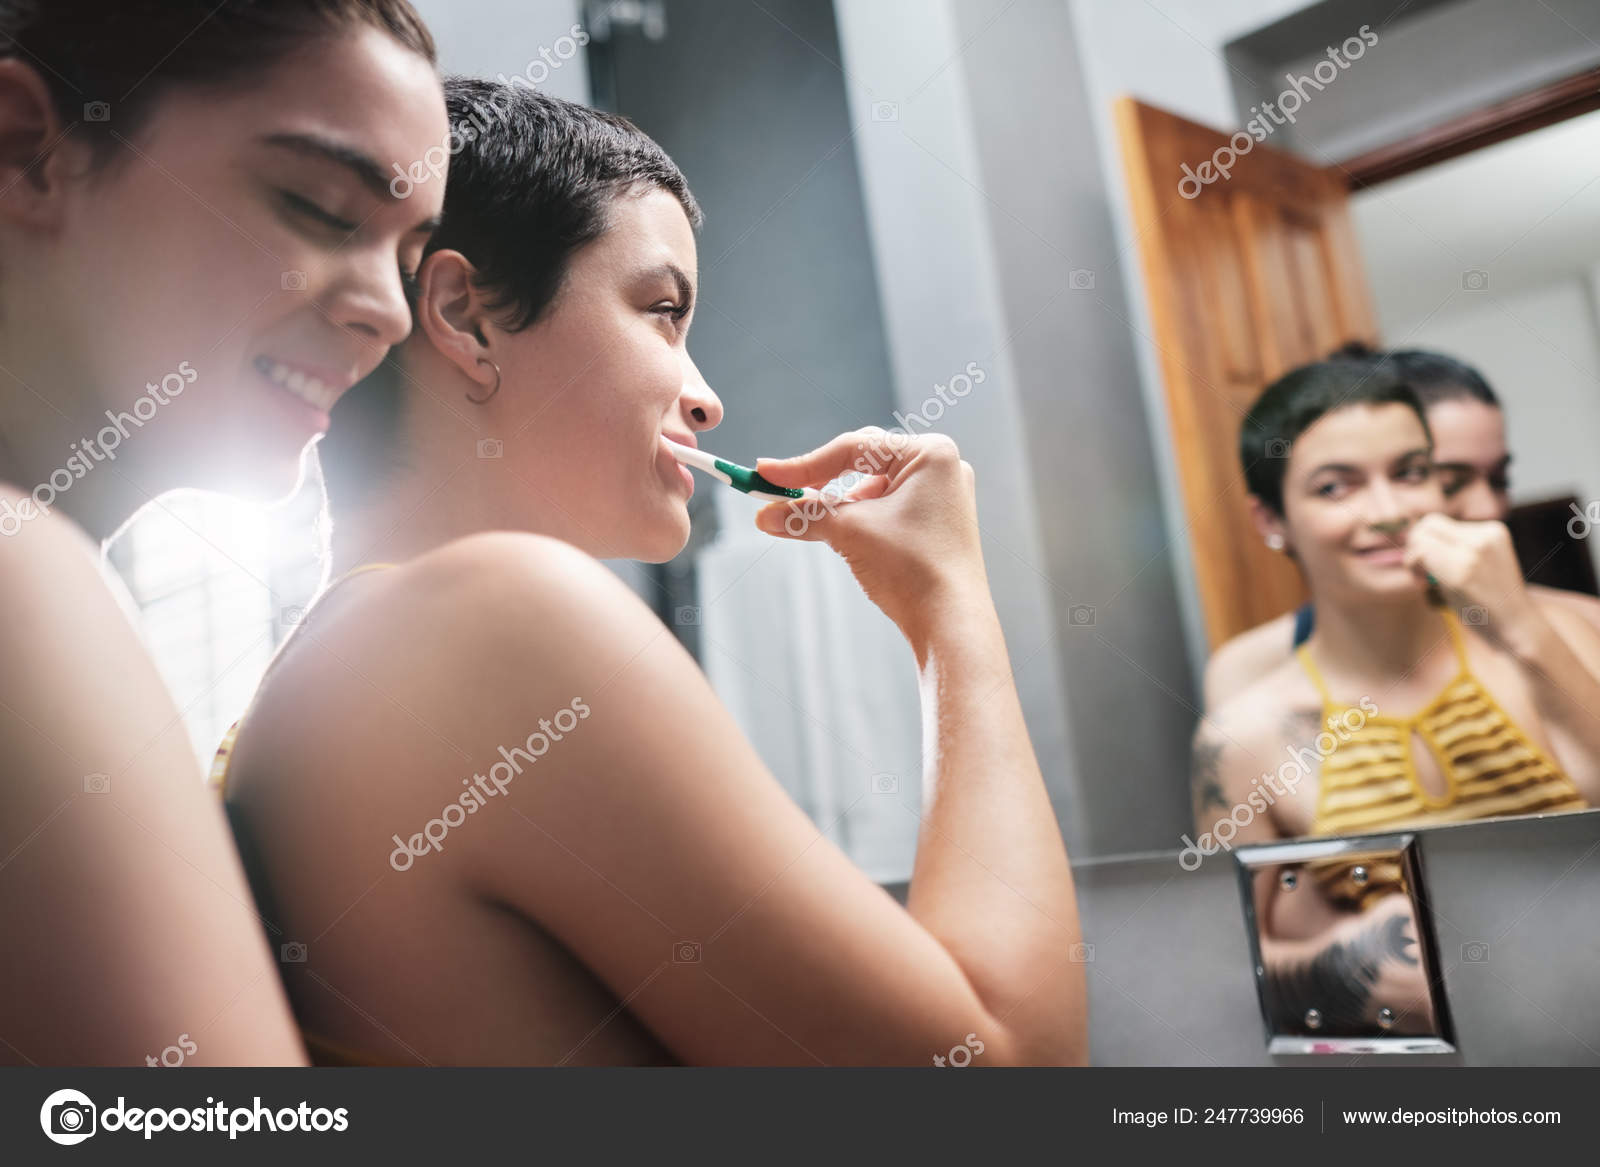 lesbian girls in shower xxx porn video pic